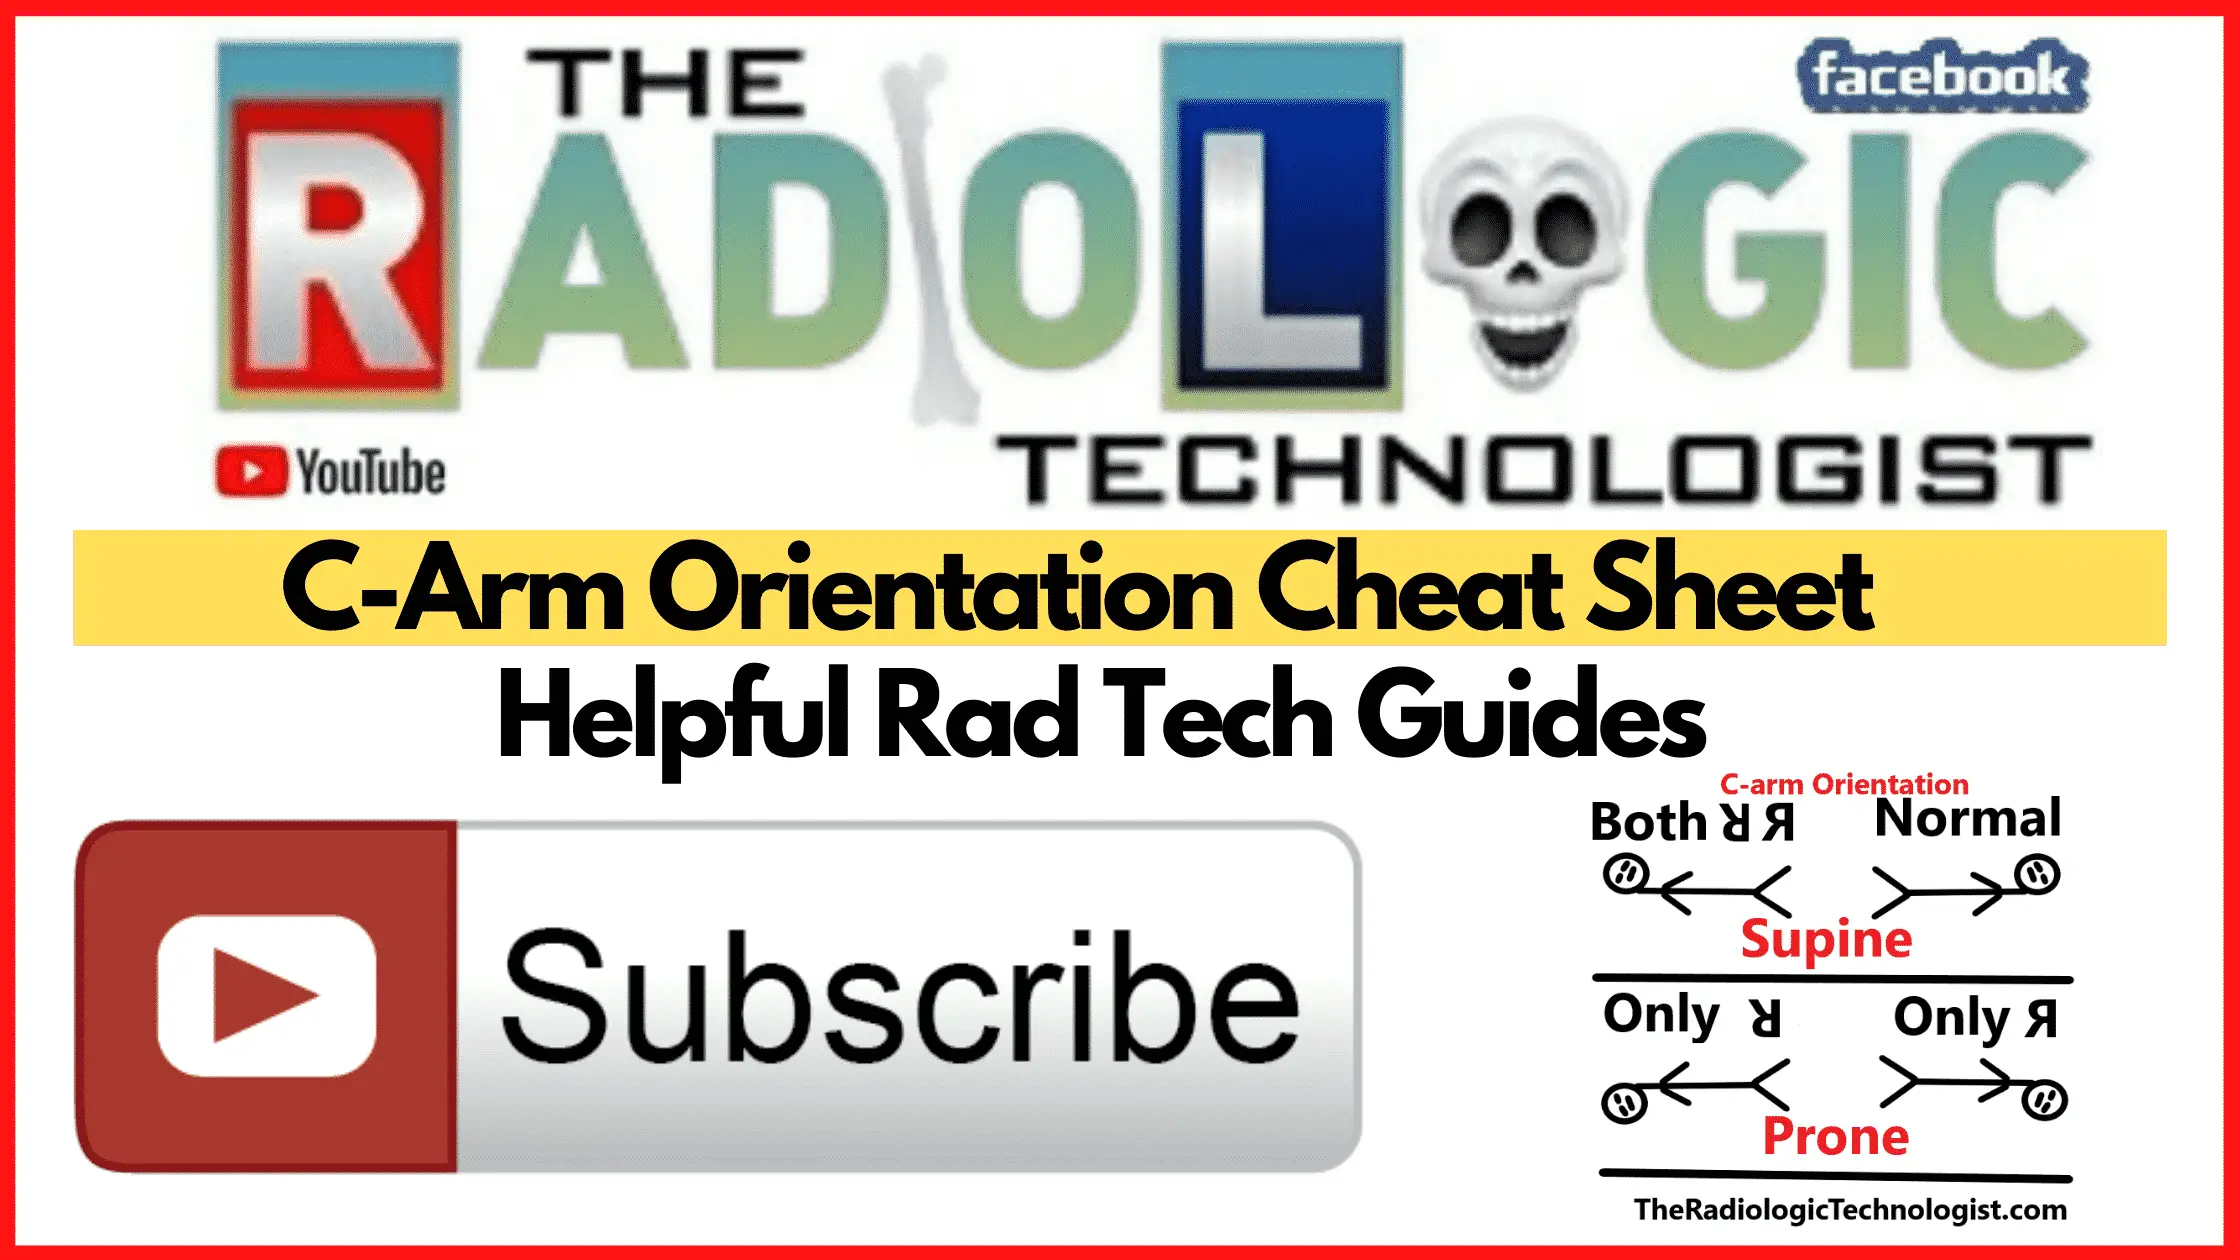 C-arm Orientation Cheat Sheet for Rad Techs